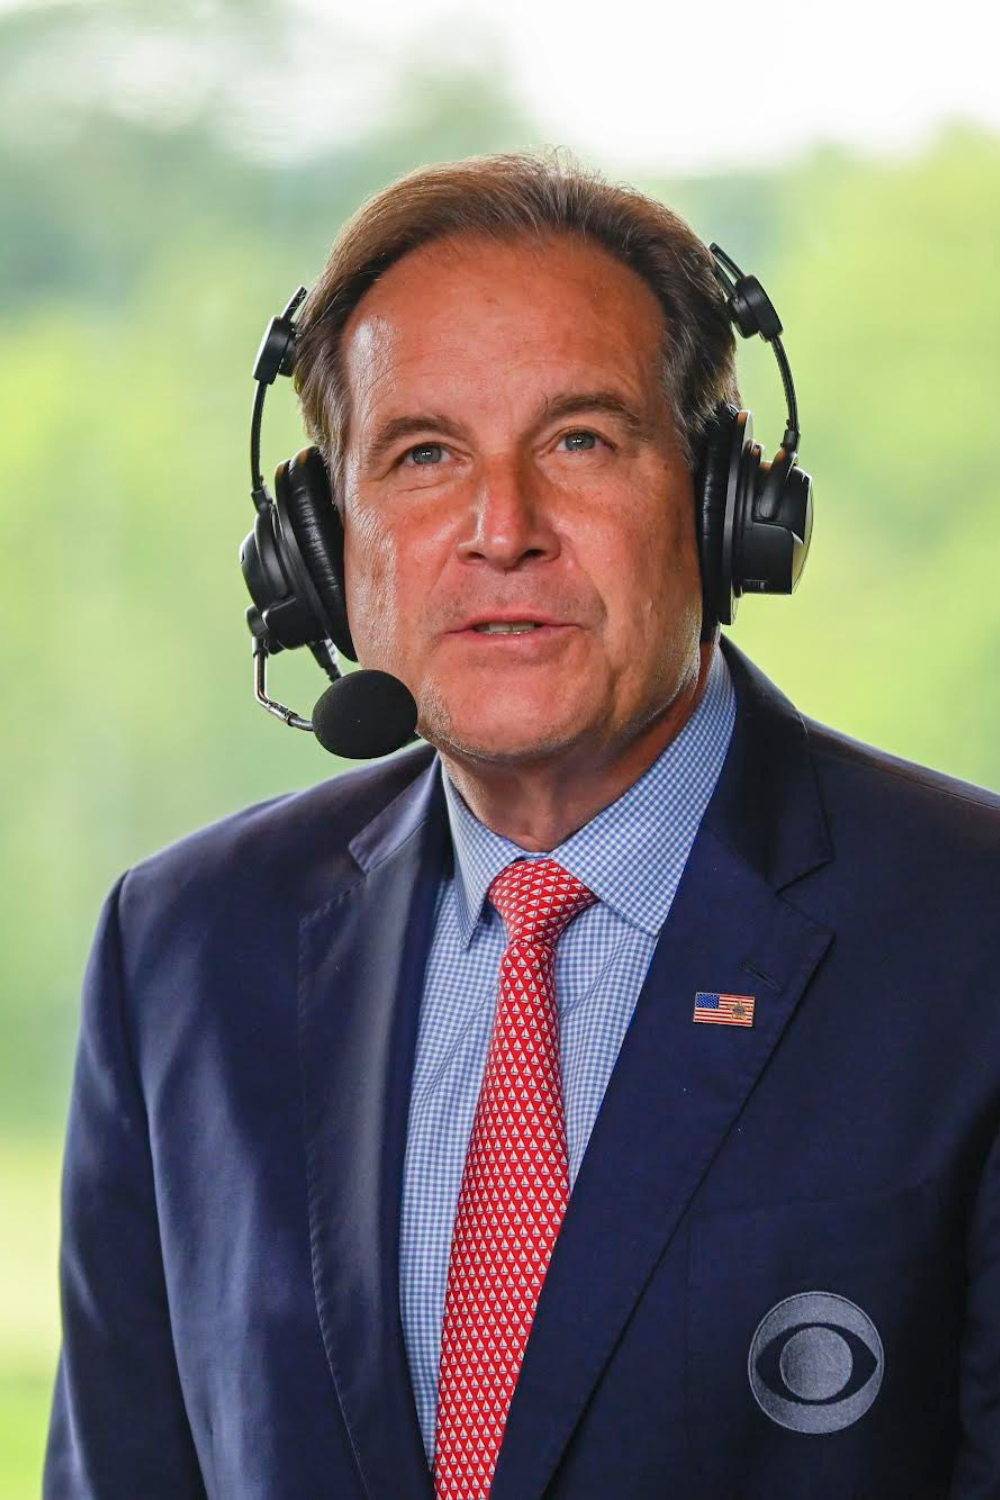 Jim Nantz, An American Sportscaster